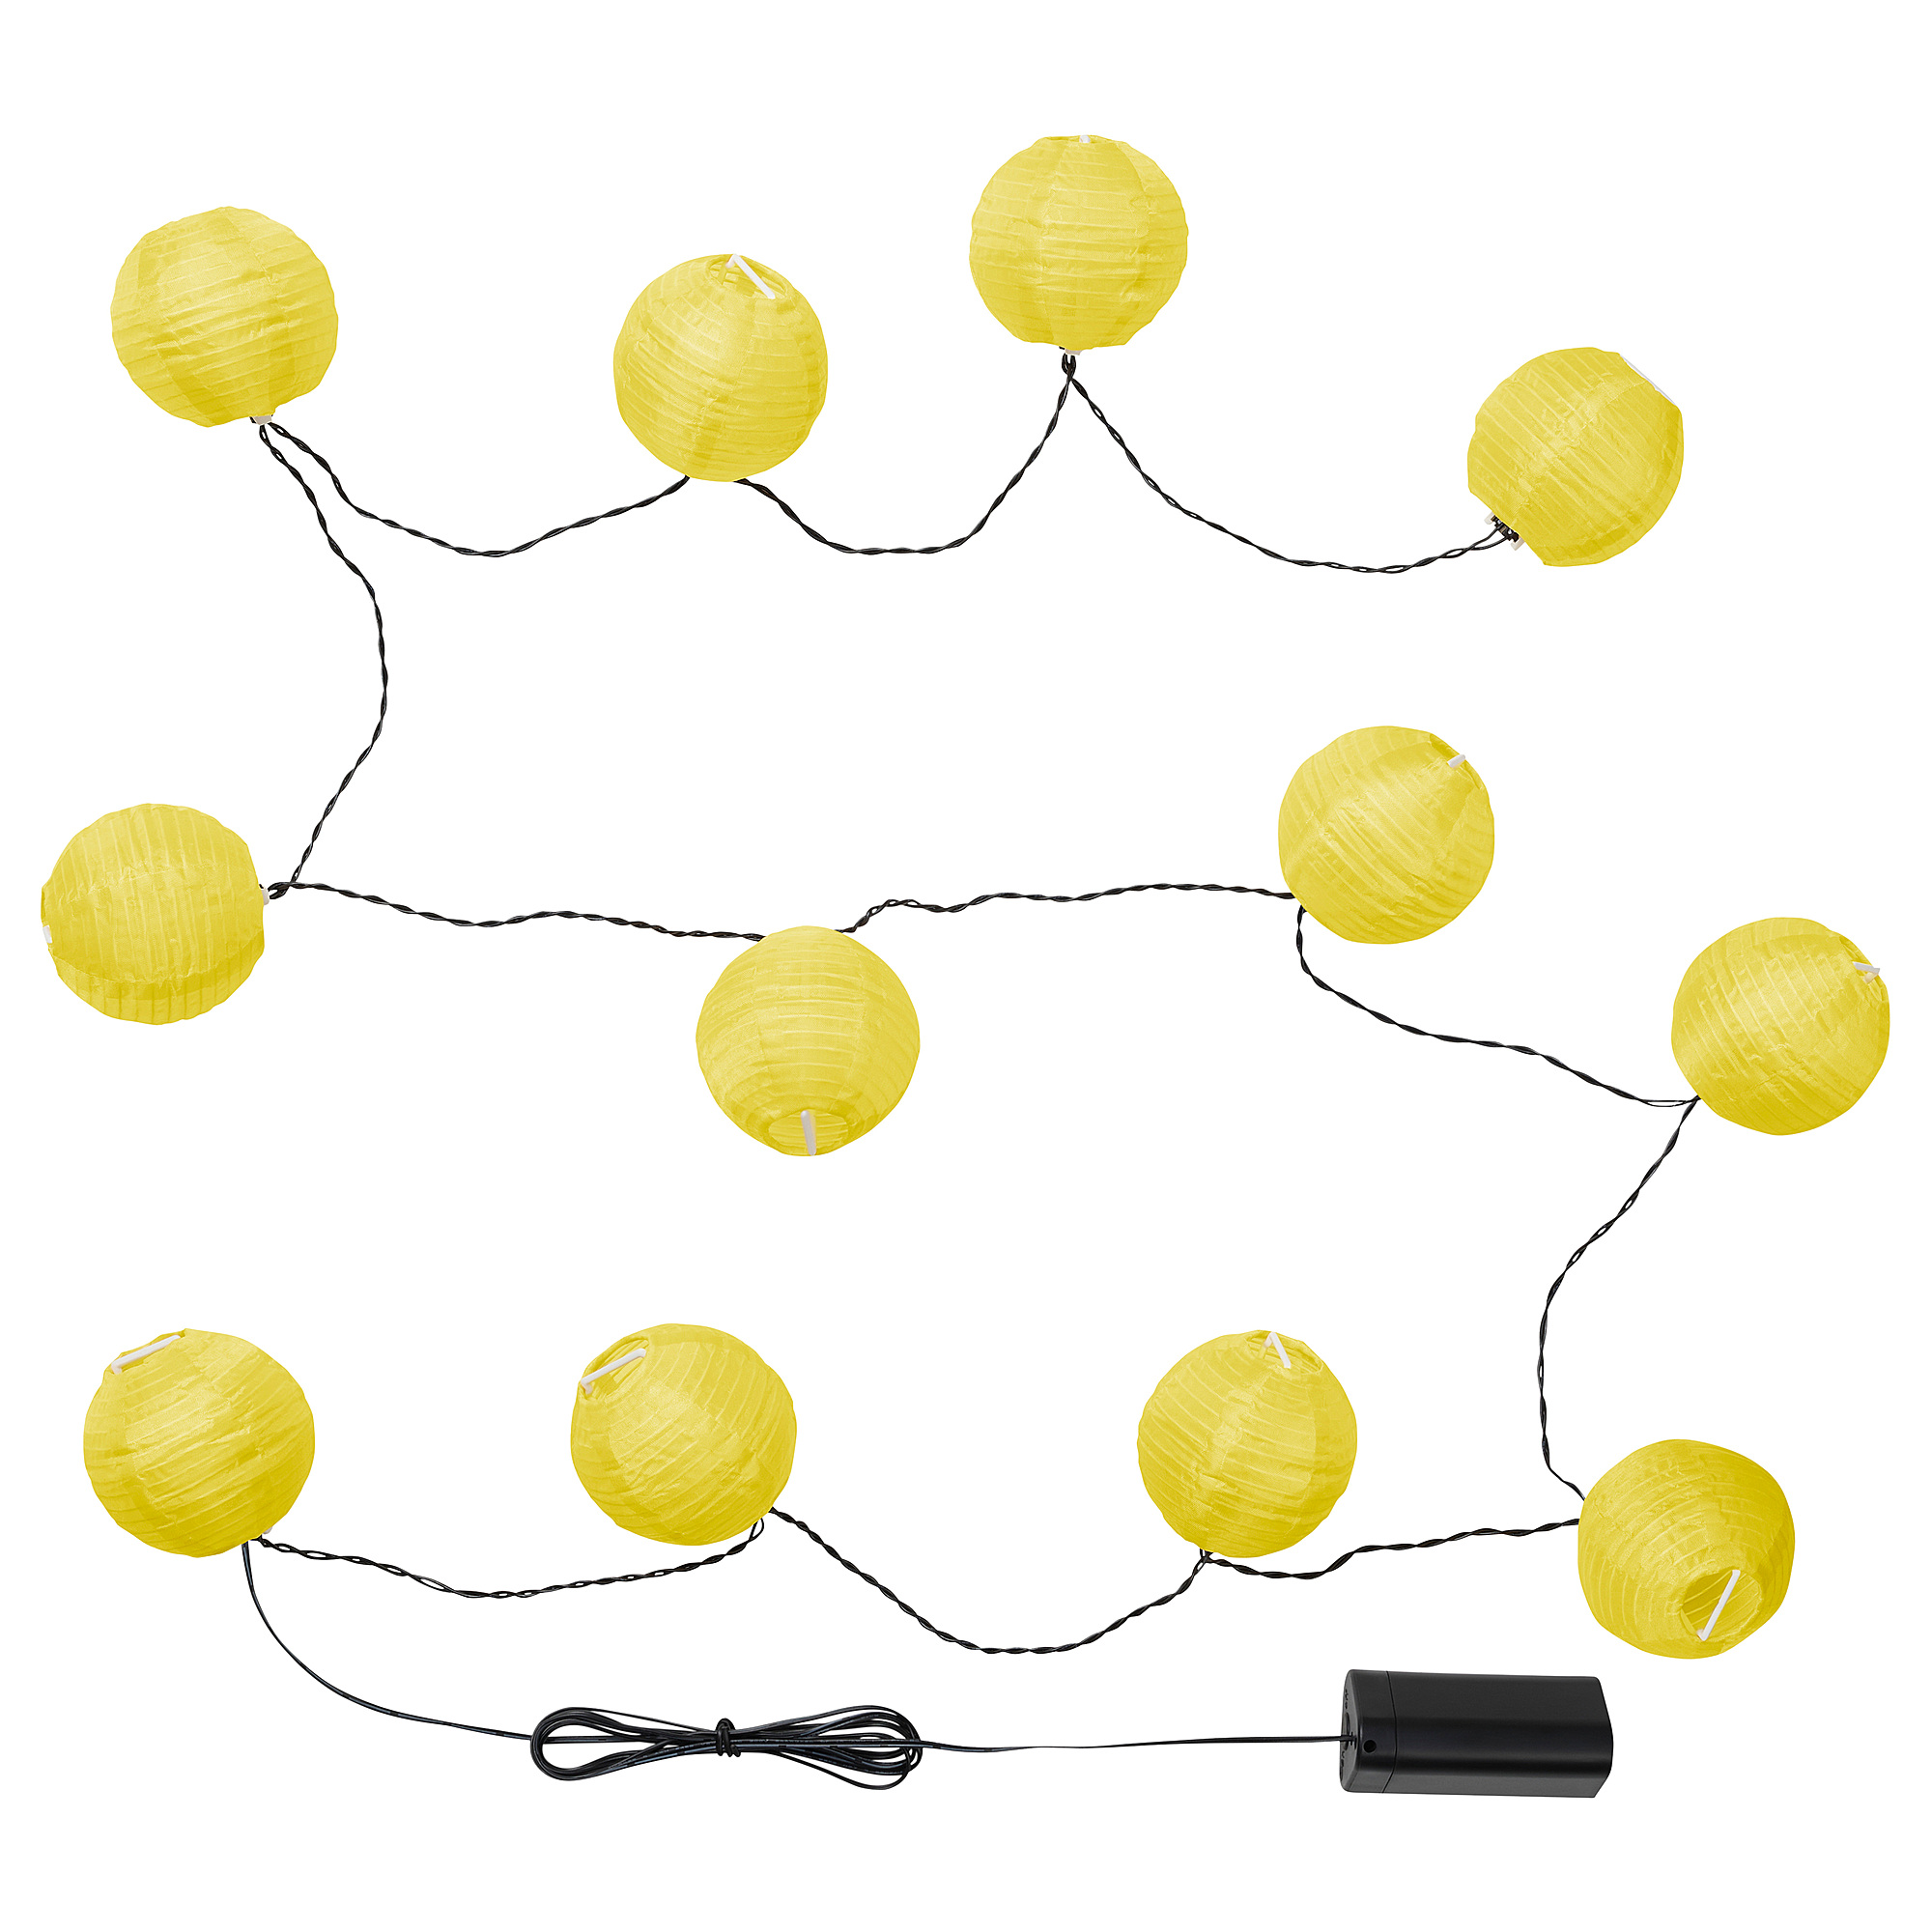 SOLVINDEN LED lighting chain with 12 lights